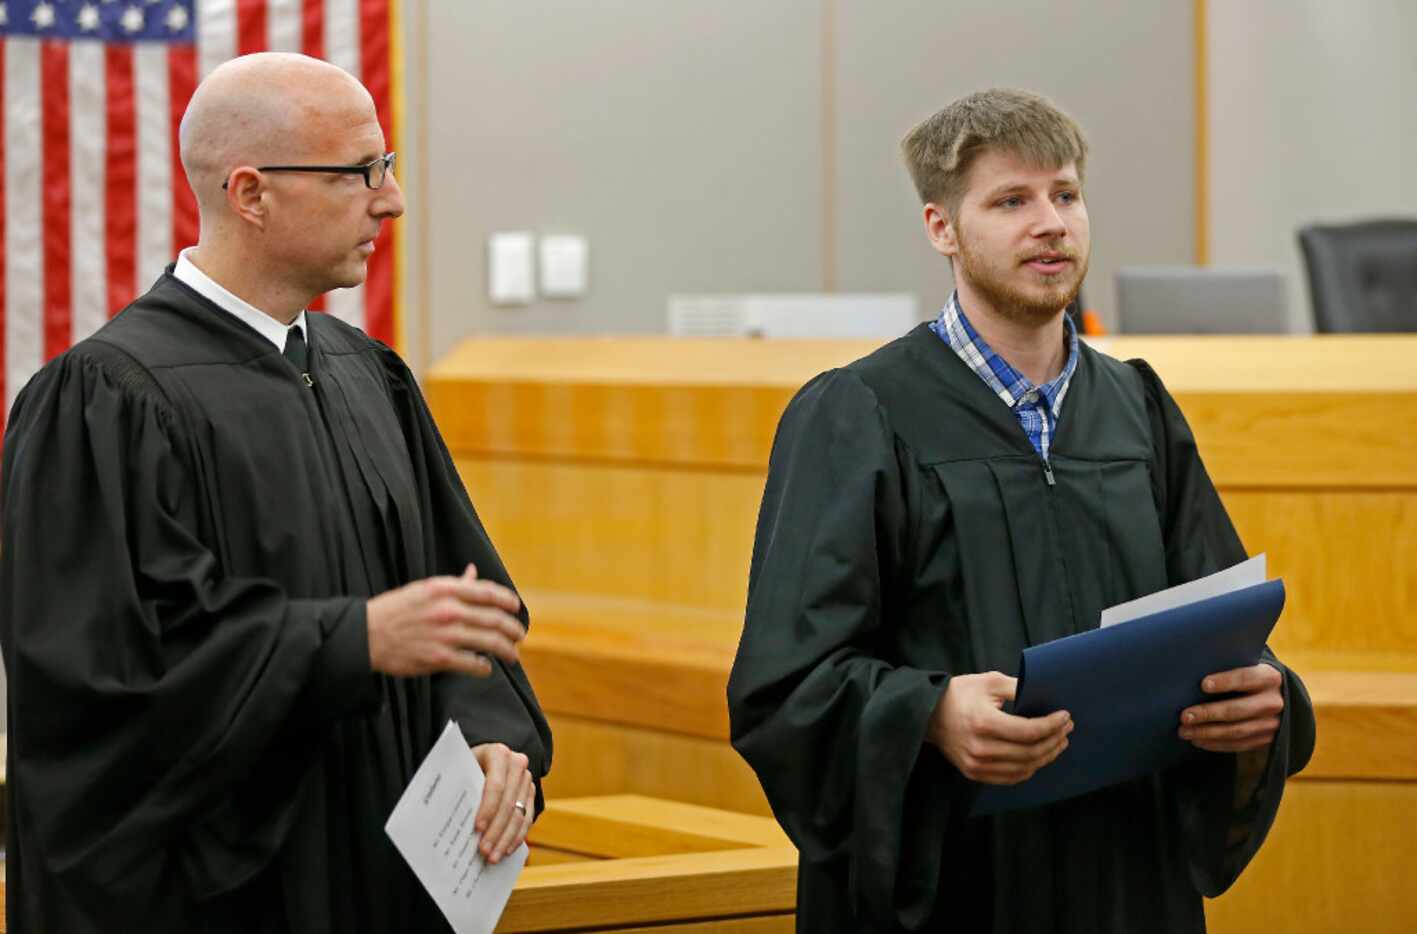 Charles Troutman (right) spoke next to Judge Brandon Birmingham during a graduation ceremony...